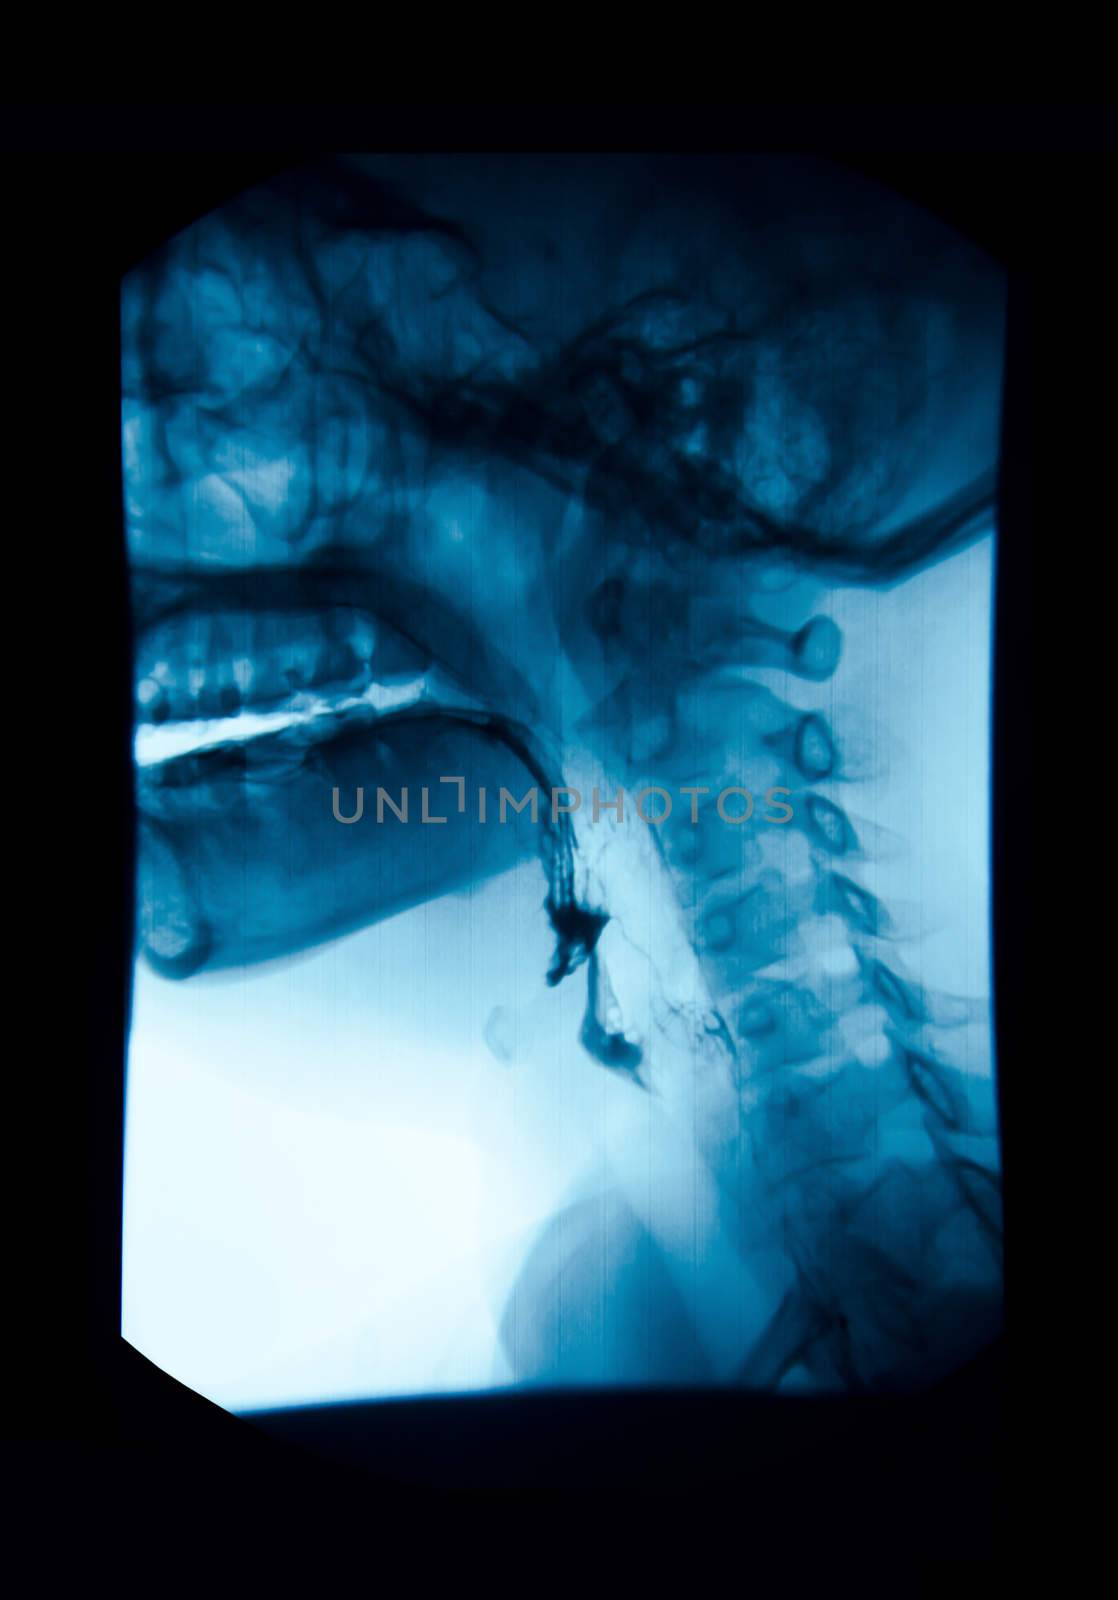 The image of x-ray upper gastrointestinal (UGI), Esophagram. by Gamjai